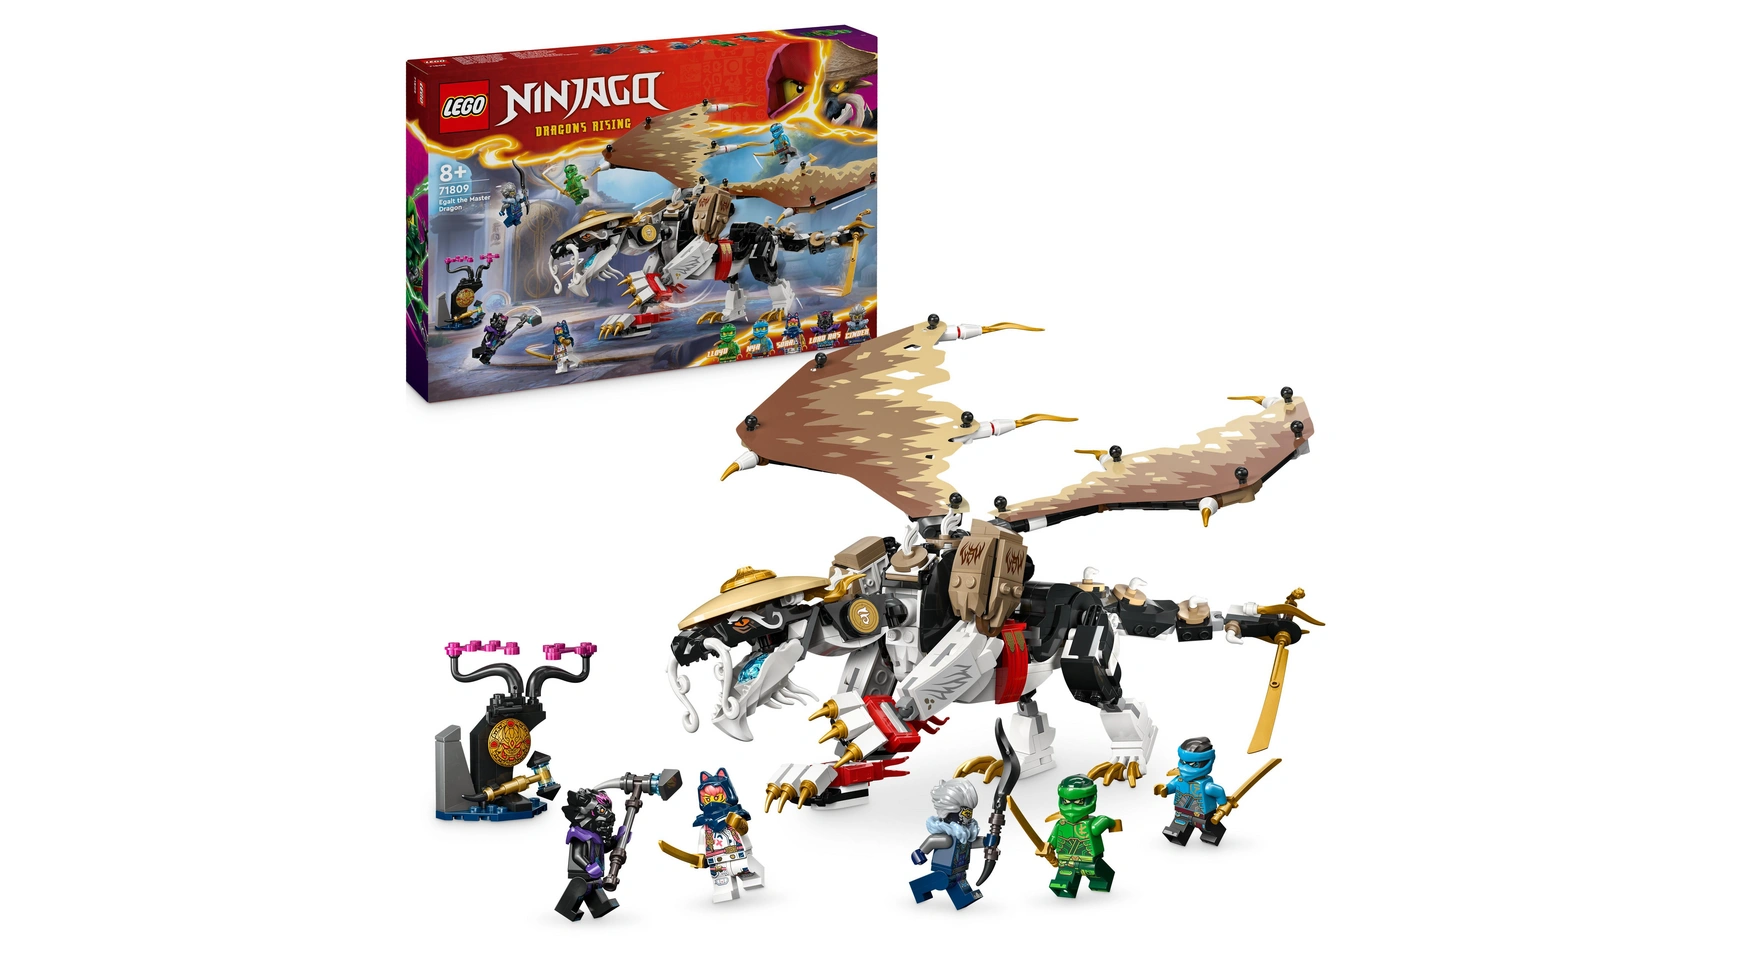 Lego NINJAGO Эгалт повелитель драконов, набор ниндзя с игрушками-драконами lego 71786 ninjago zane’s ice dragon creature